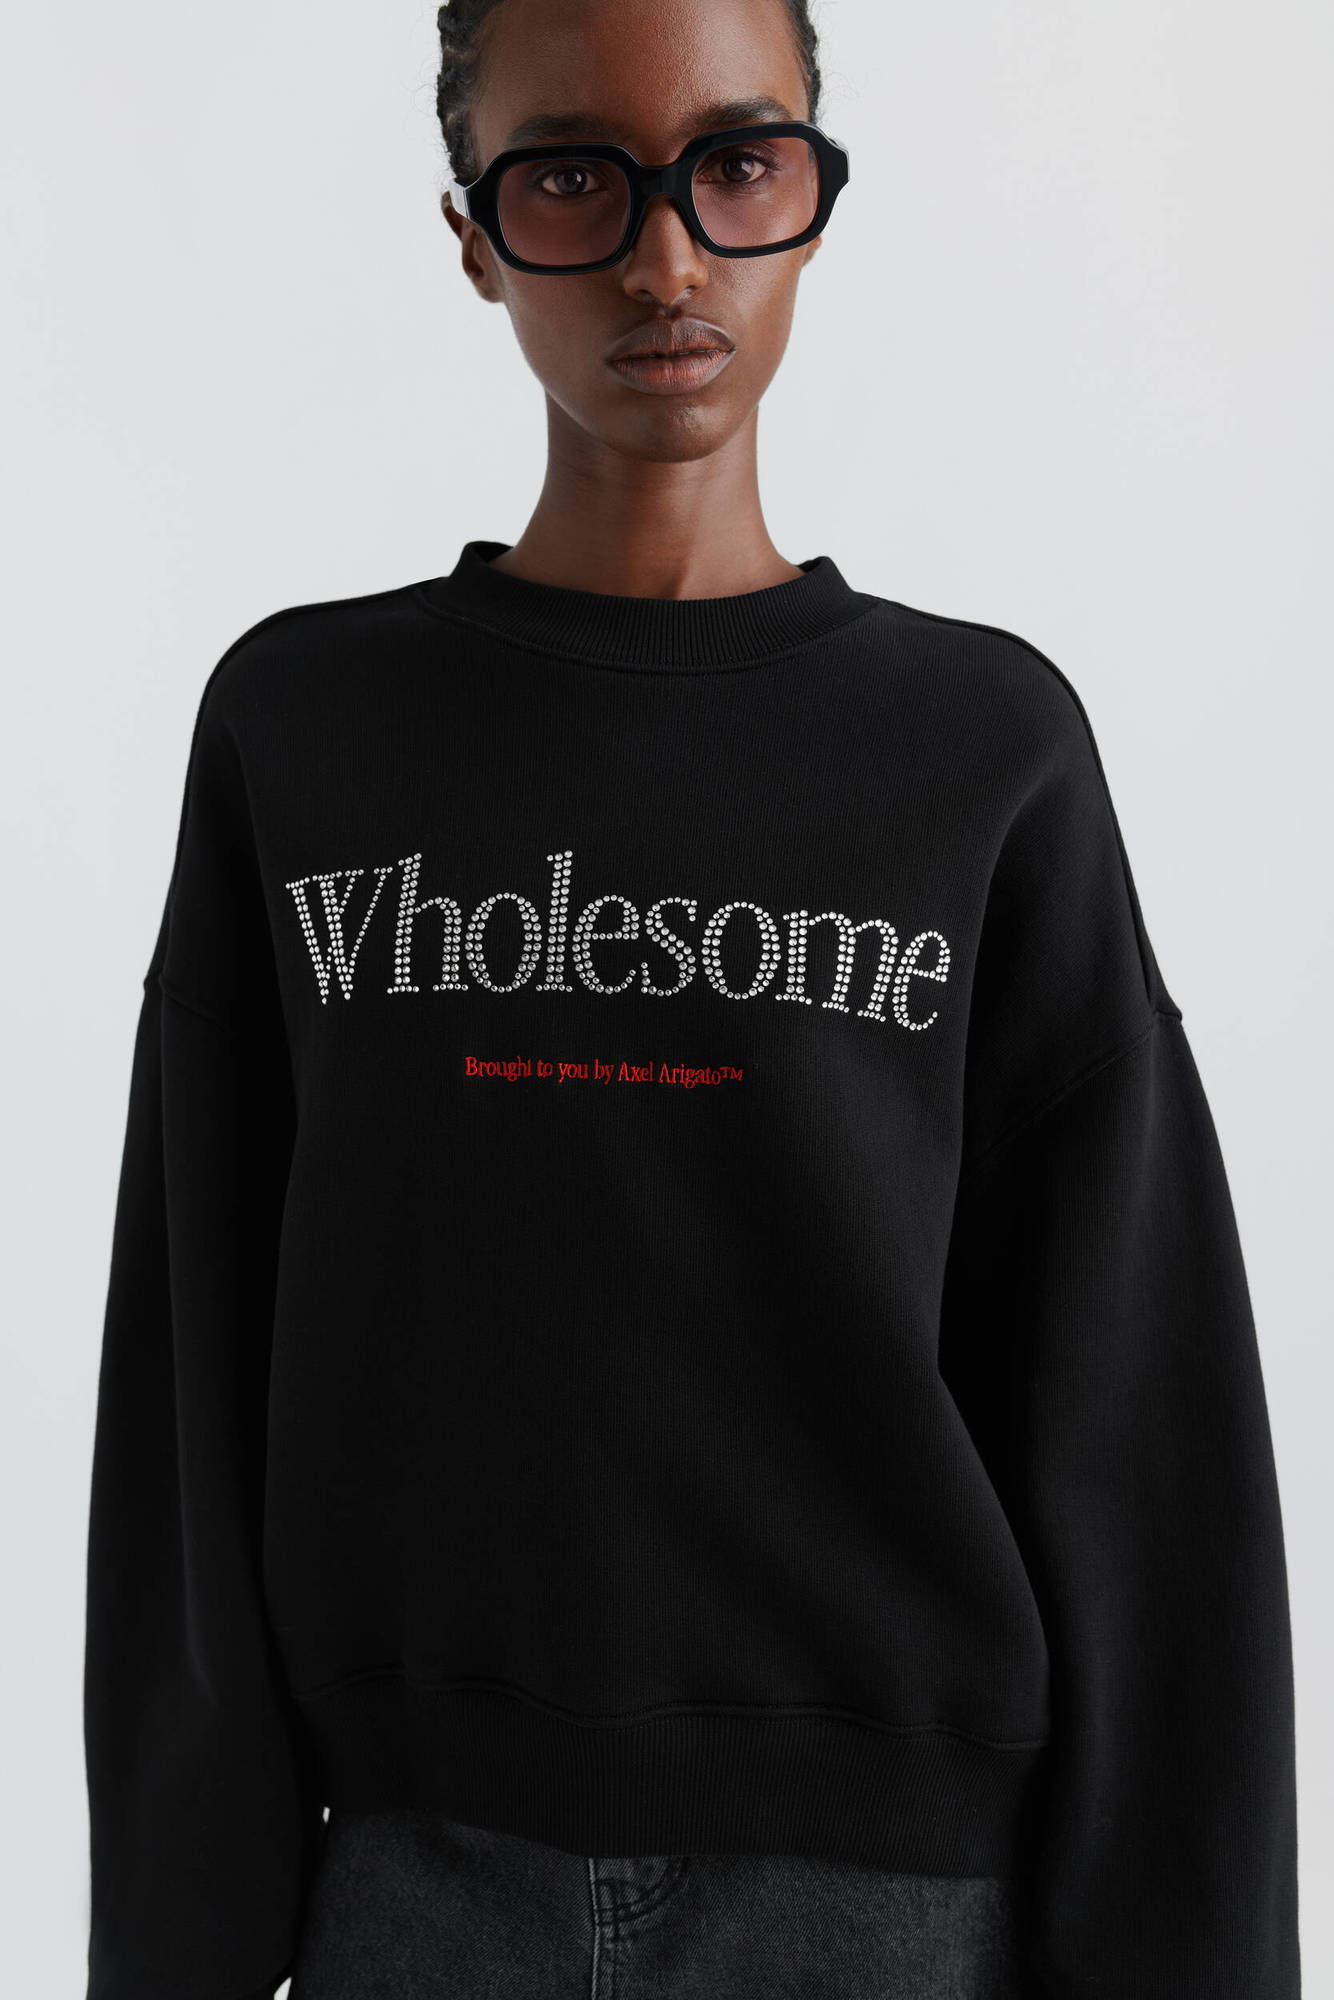 Wholesome Swarovski Sweatshirt